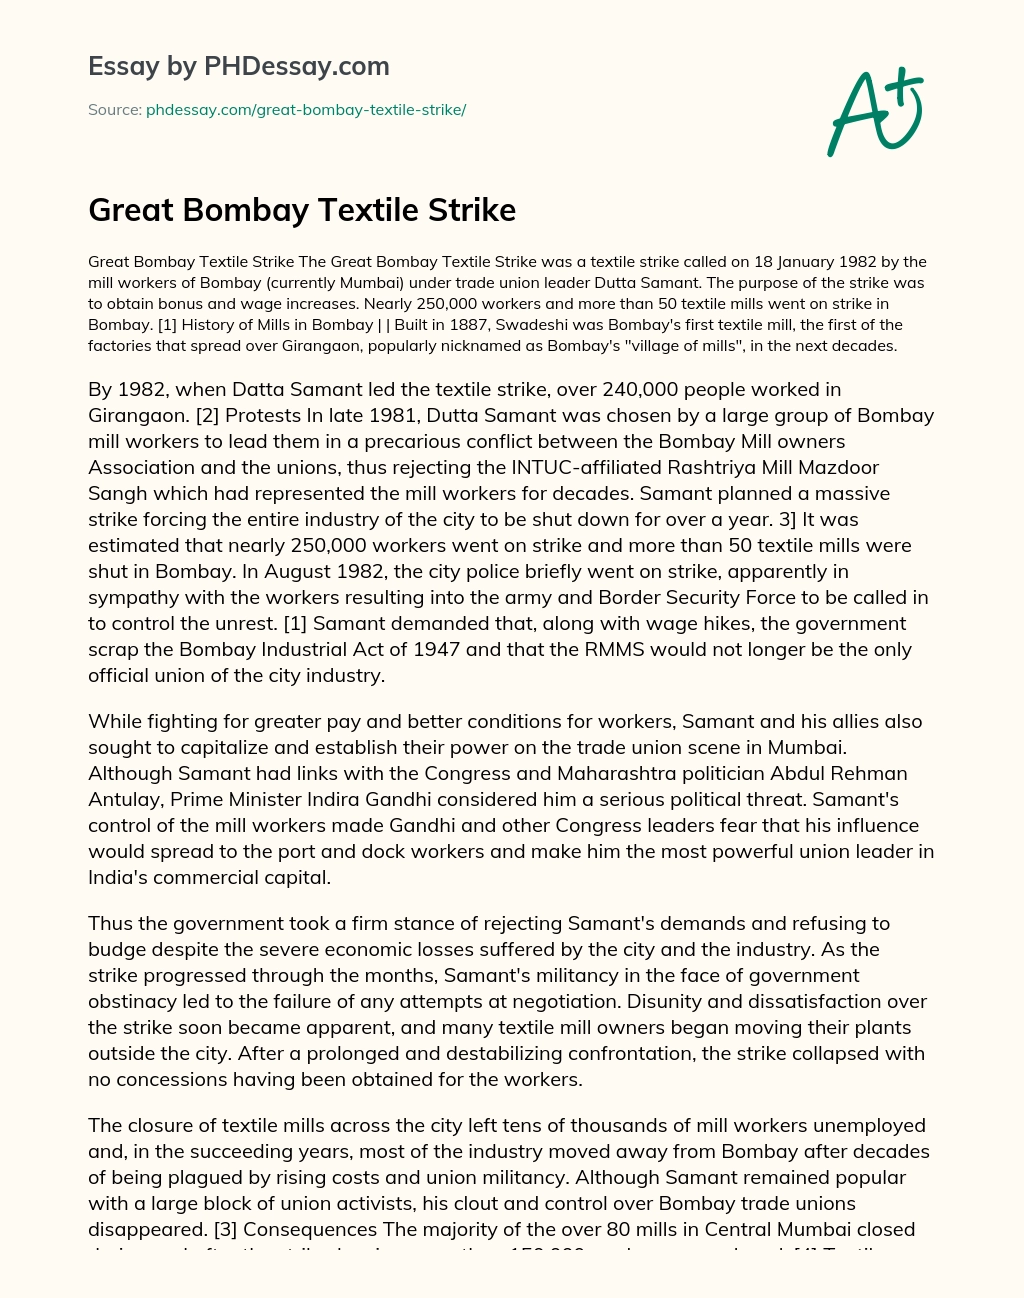 Great Bombay Textile Strike essay